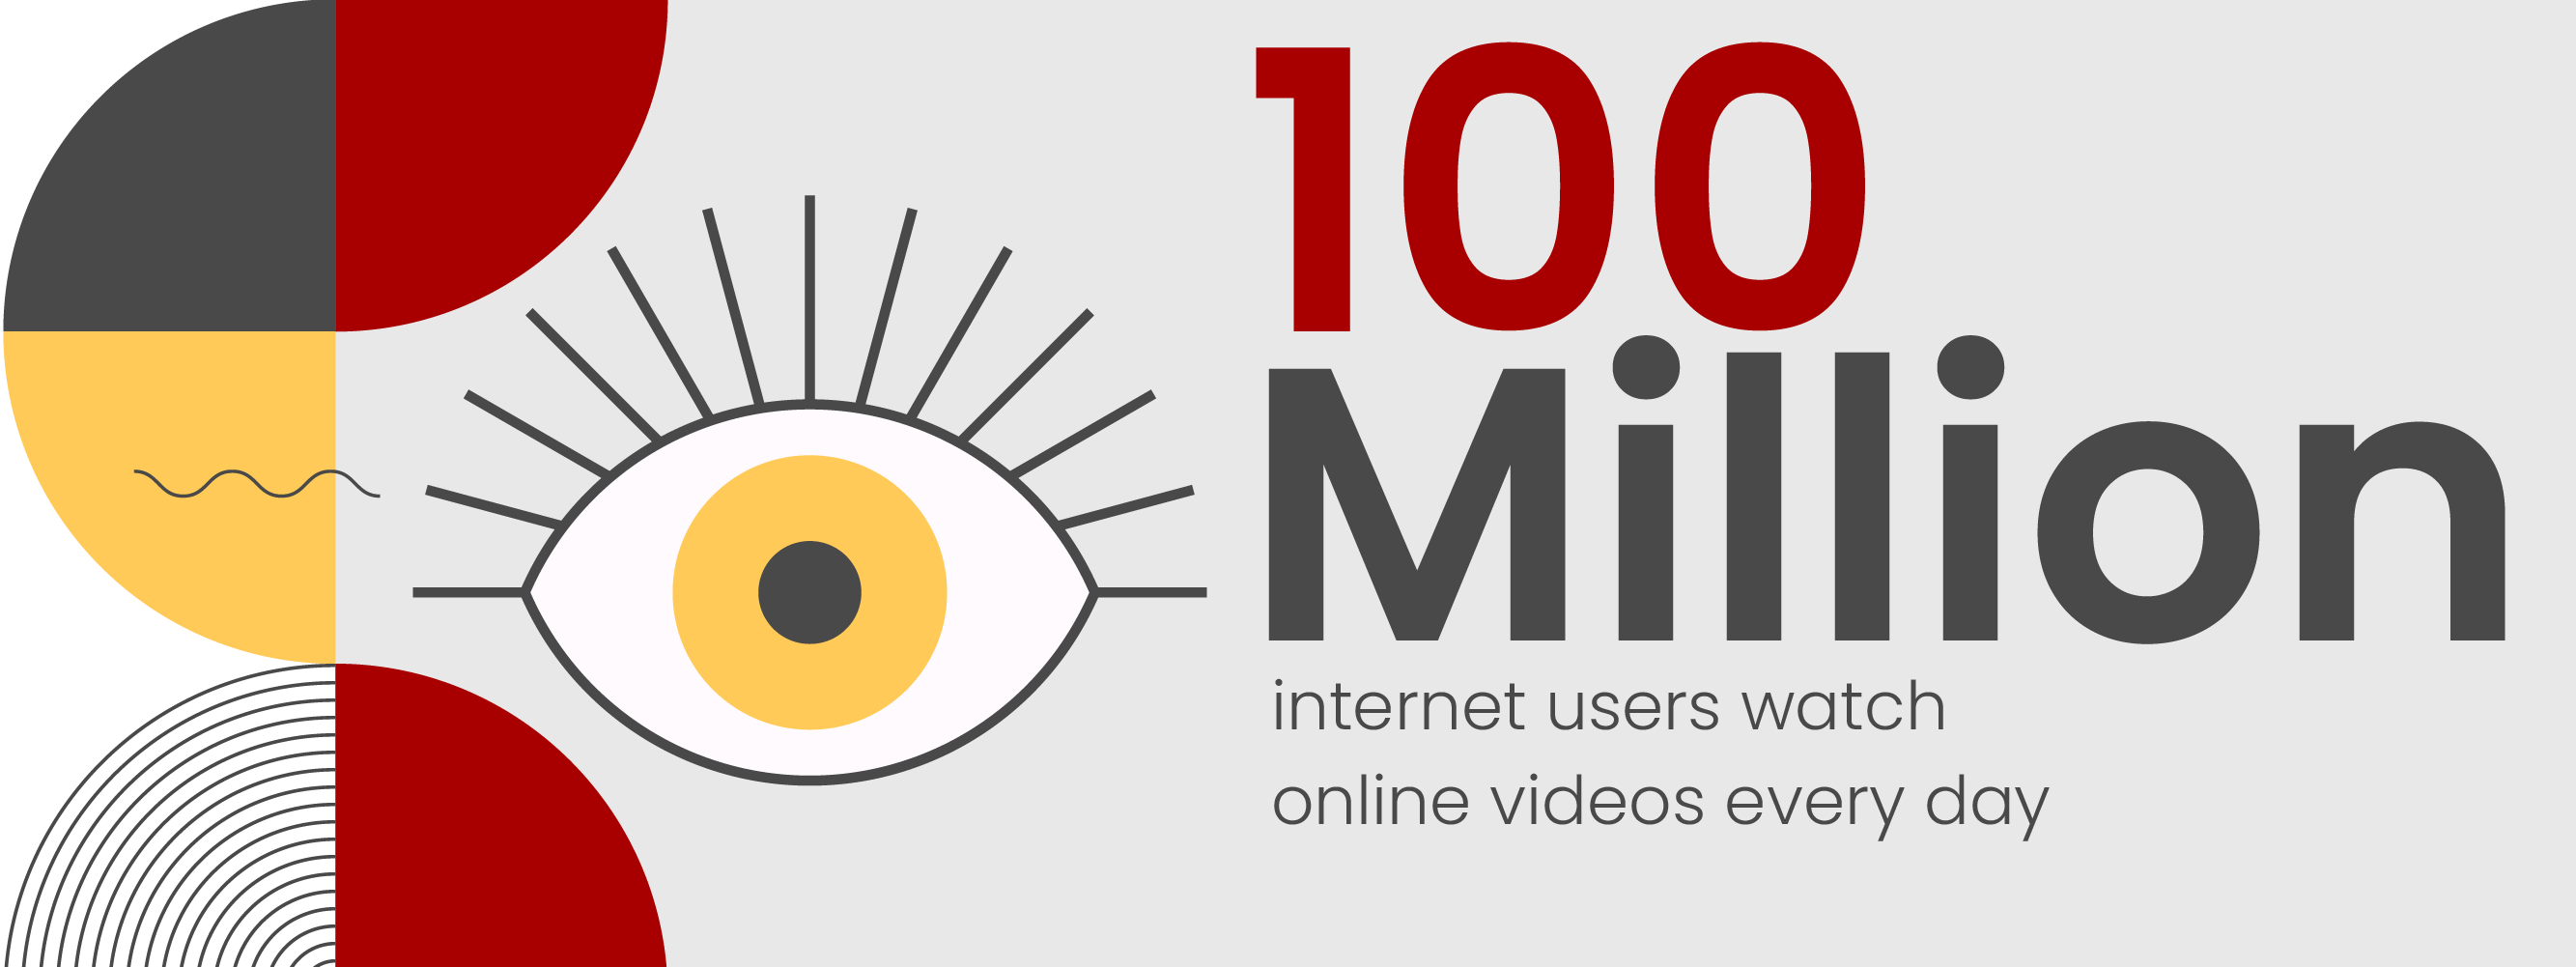 Users watching videos worldwide